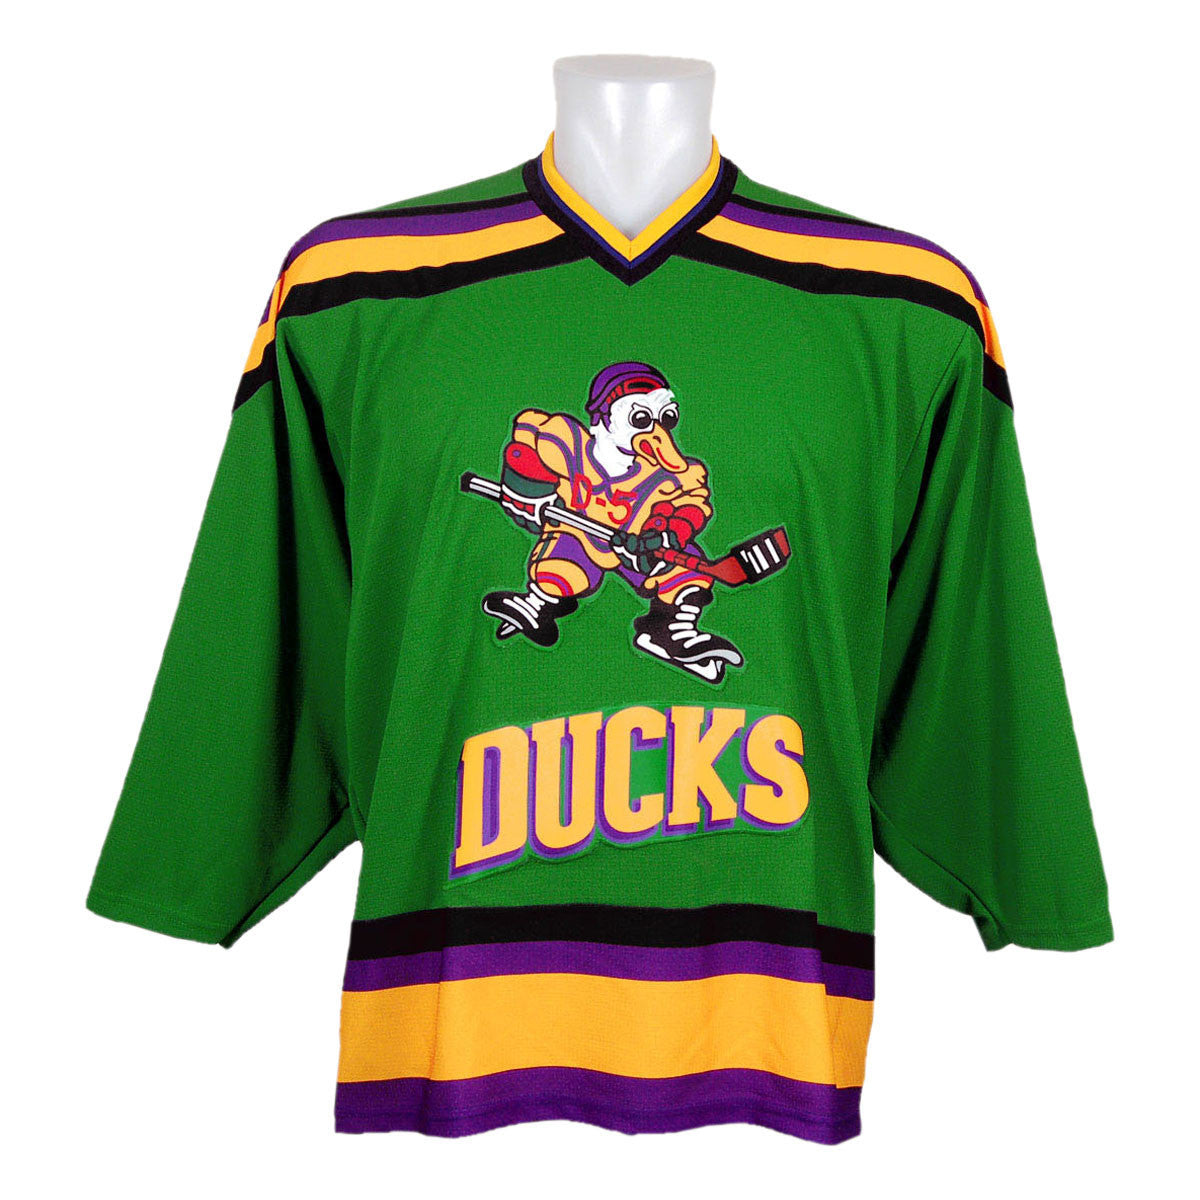 the mighty ducks movie jersey